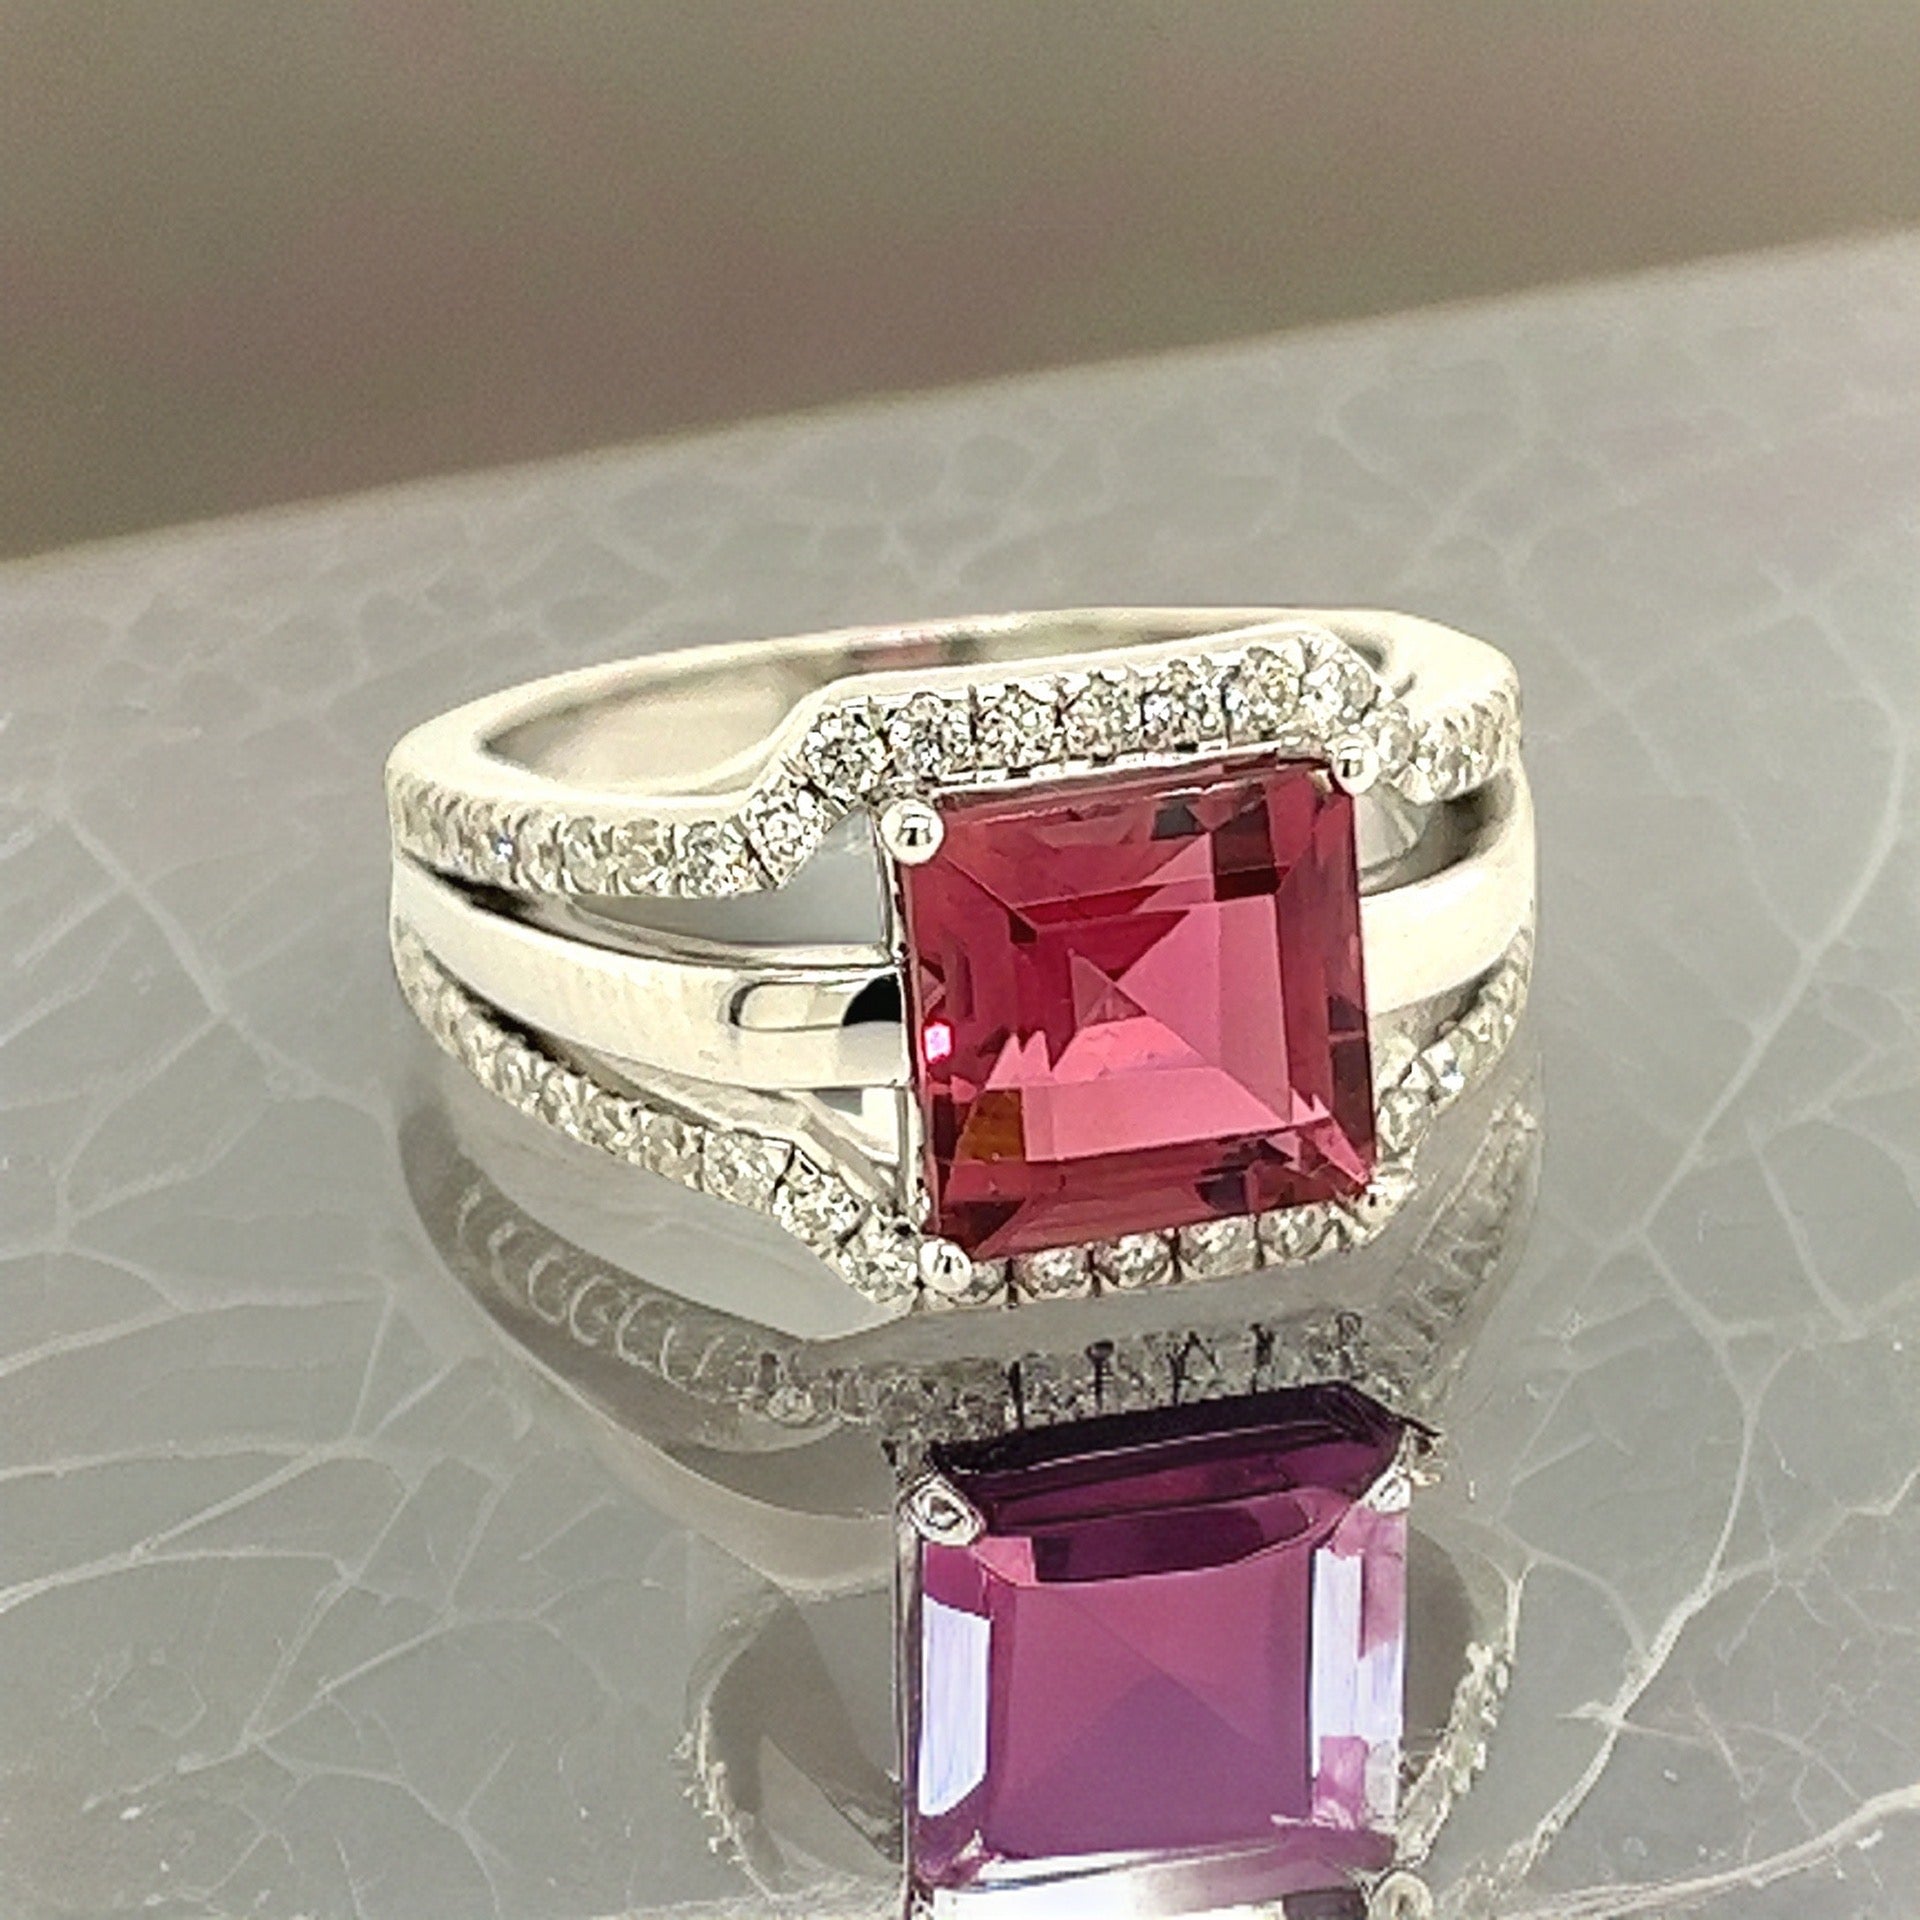 Natural Tourmaline Diamond Ring Size 6.5 14k W Gold 3.24 TCW Certified $3,950 217856 - Certified Fine Jewelry